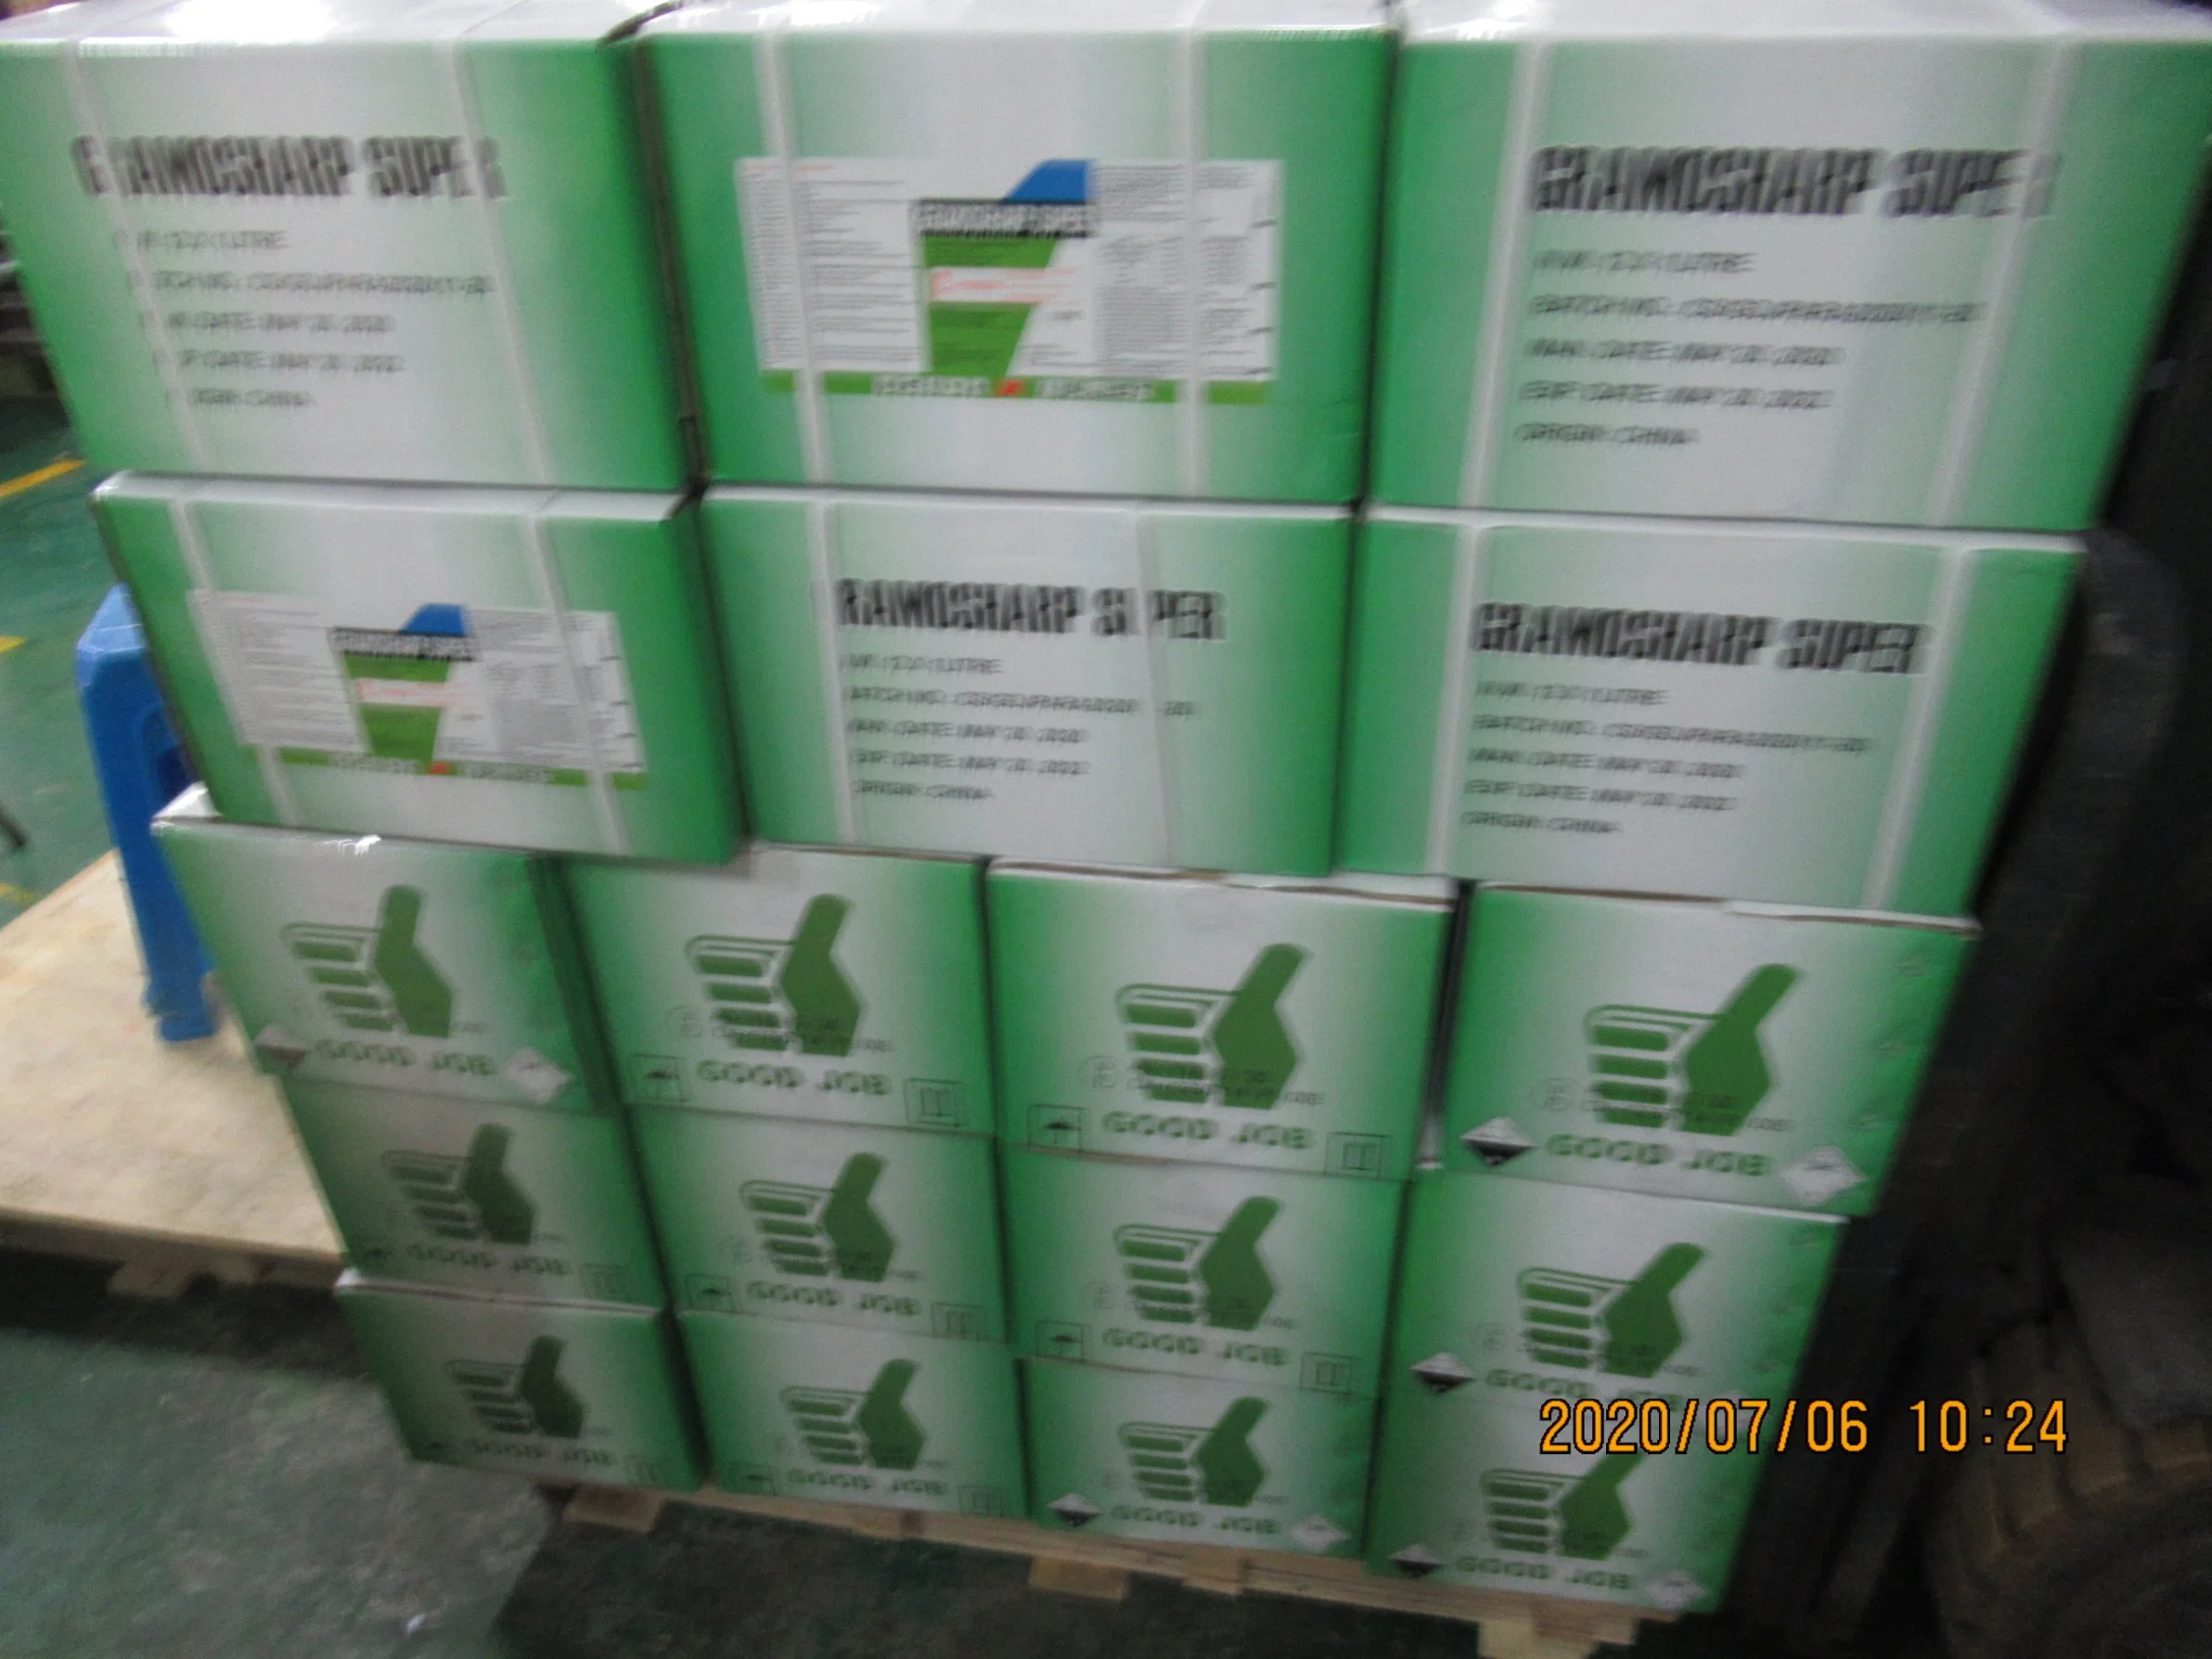 Usine chinoise fabricant d'herbicide Paraquat (42%TK, 20%SL, 276g/l SL) Herbicide Gramecoop 20 SL